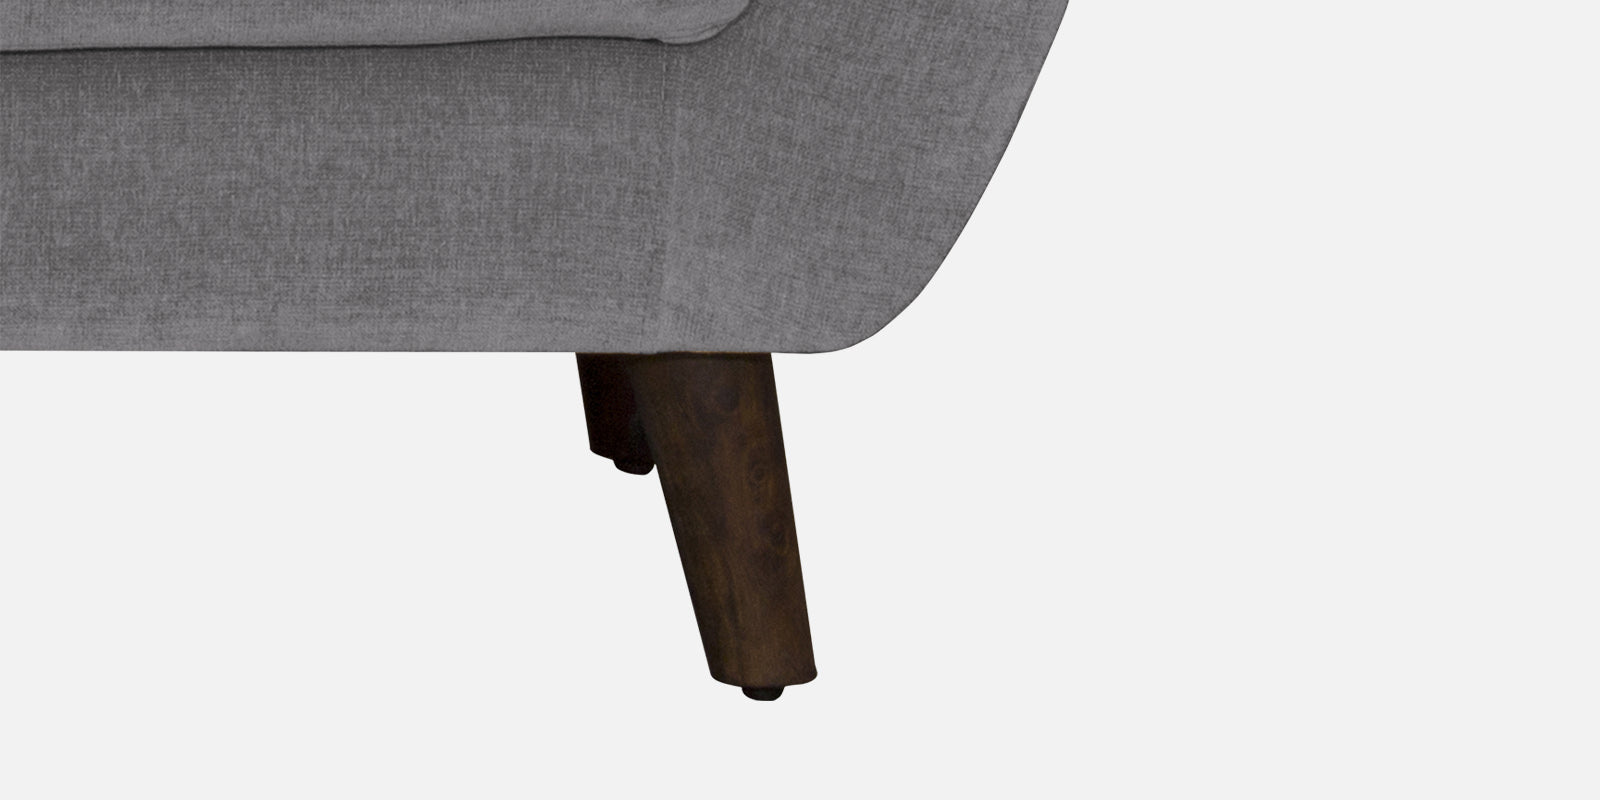 German Fabric 2 Seater Sofa in sudo grey Colour